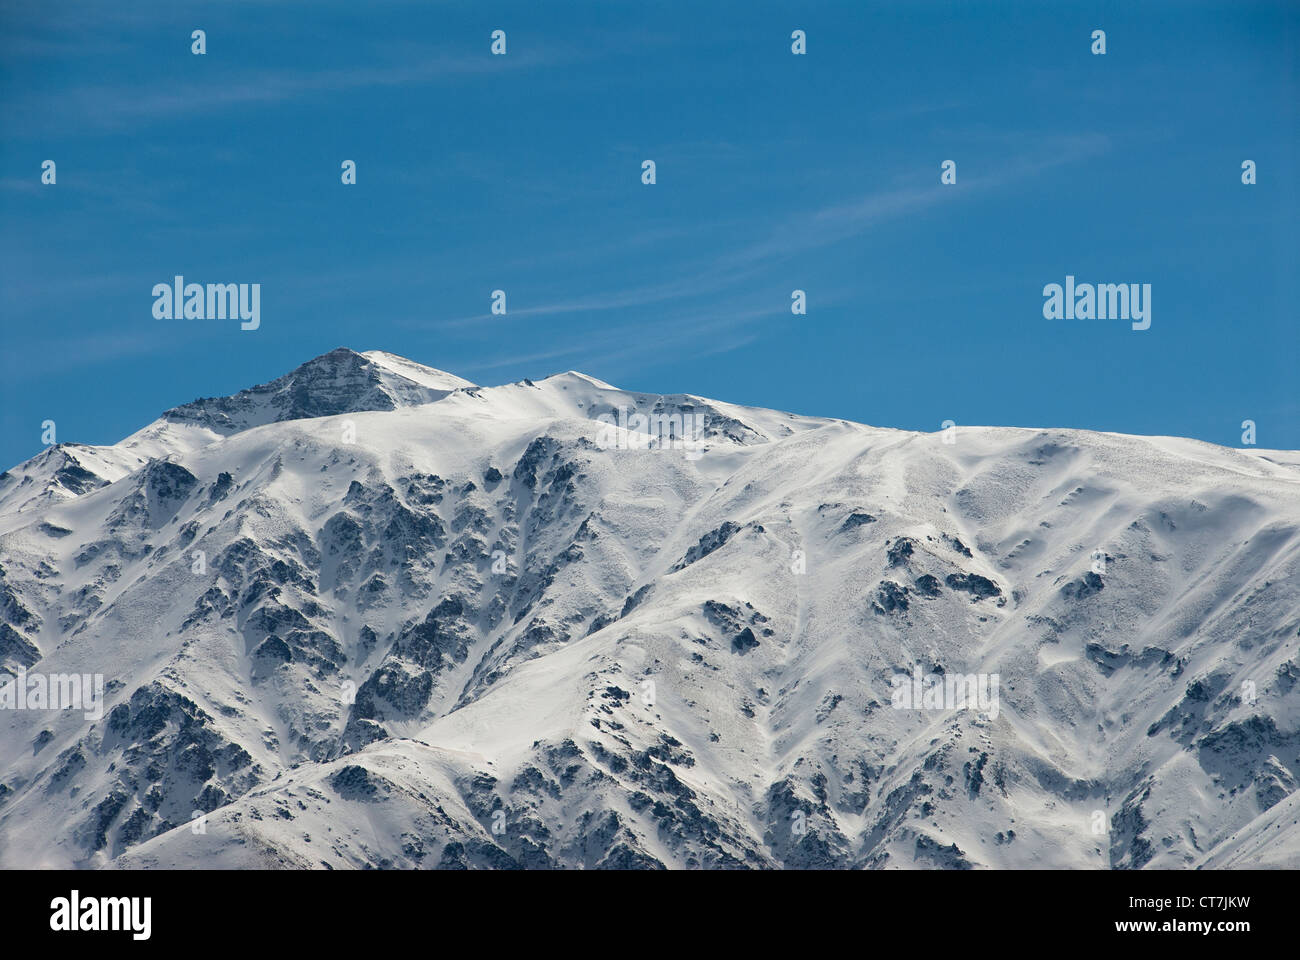 View of the Snowed peaks of the Alborz Mountain Range, Alamut, Iran Stock Photo